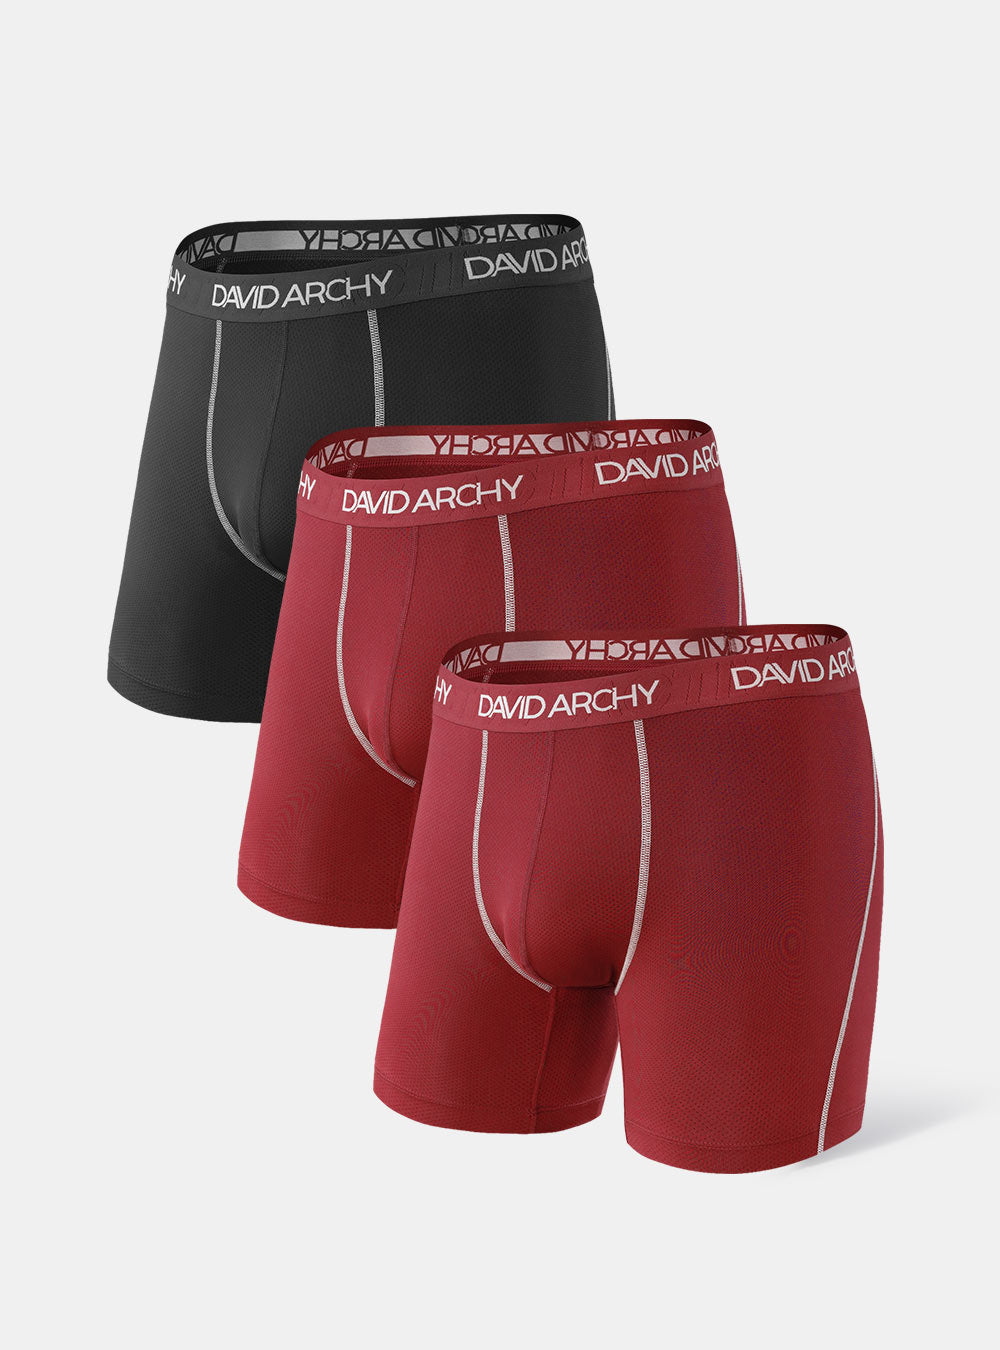 DAVID ARCHY Mens Underwear Mesh Quick Dry Boxer Briefs Active